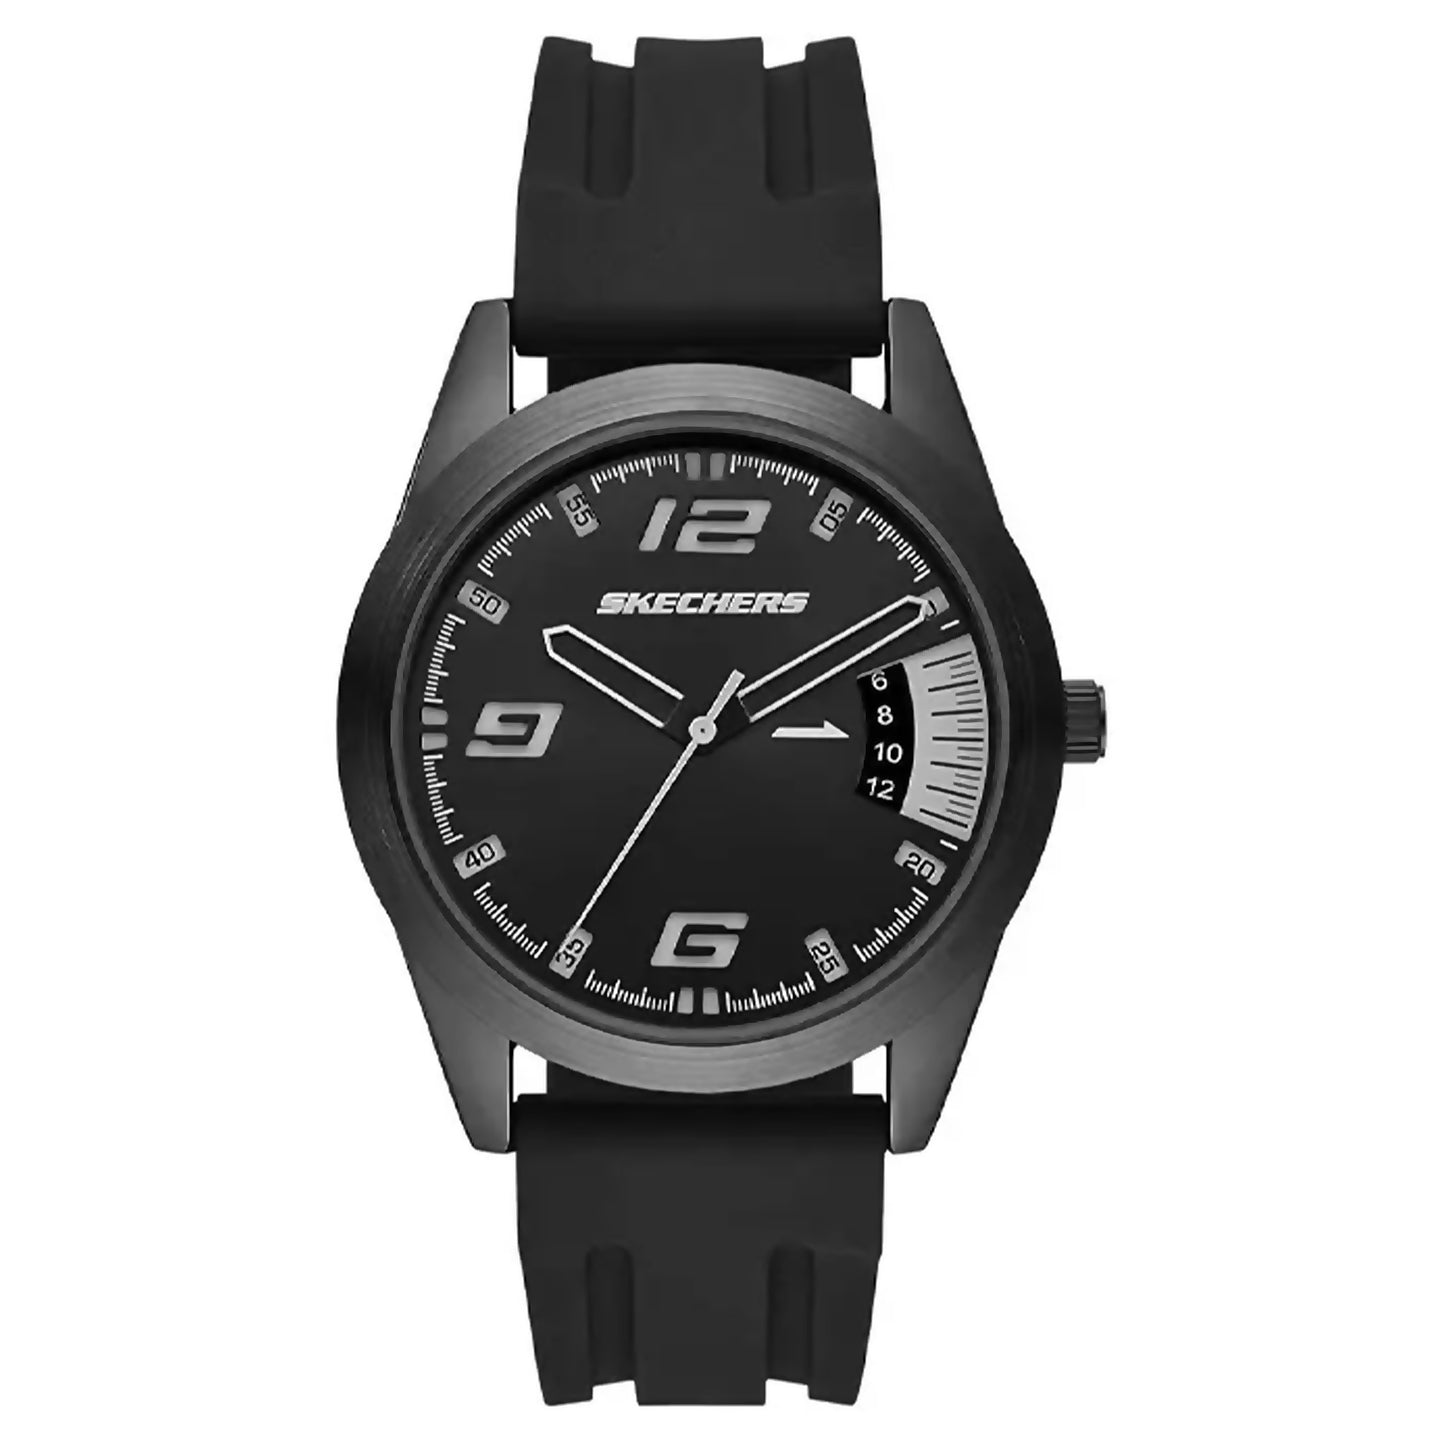 Skechers Reseda Black Silicone Strap Analog Watch SKC-SR5199